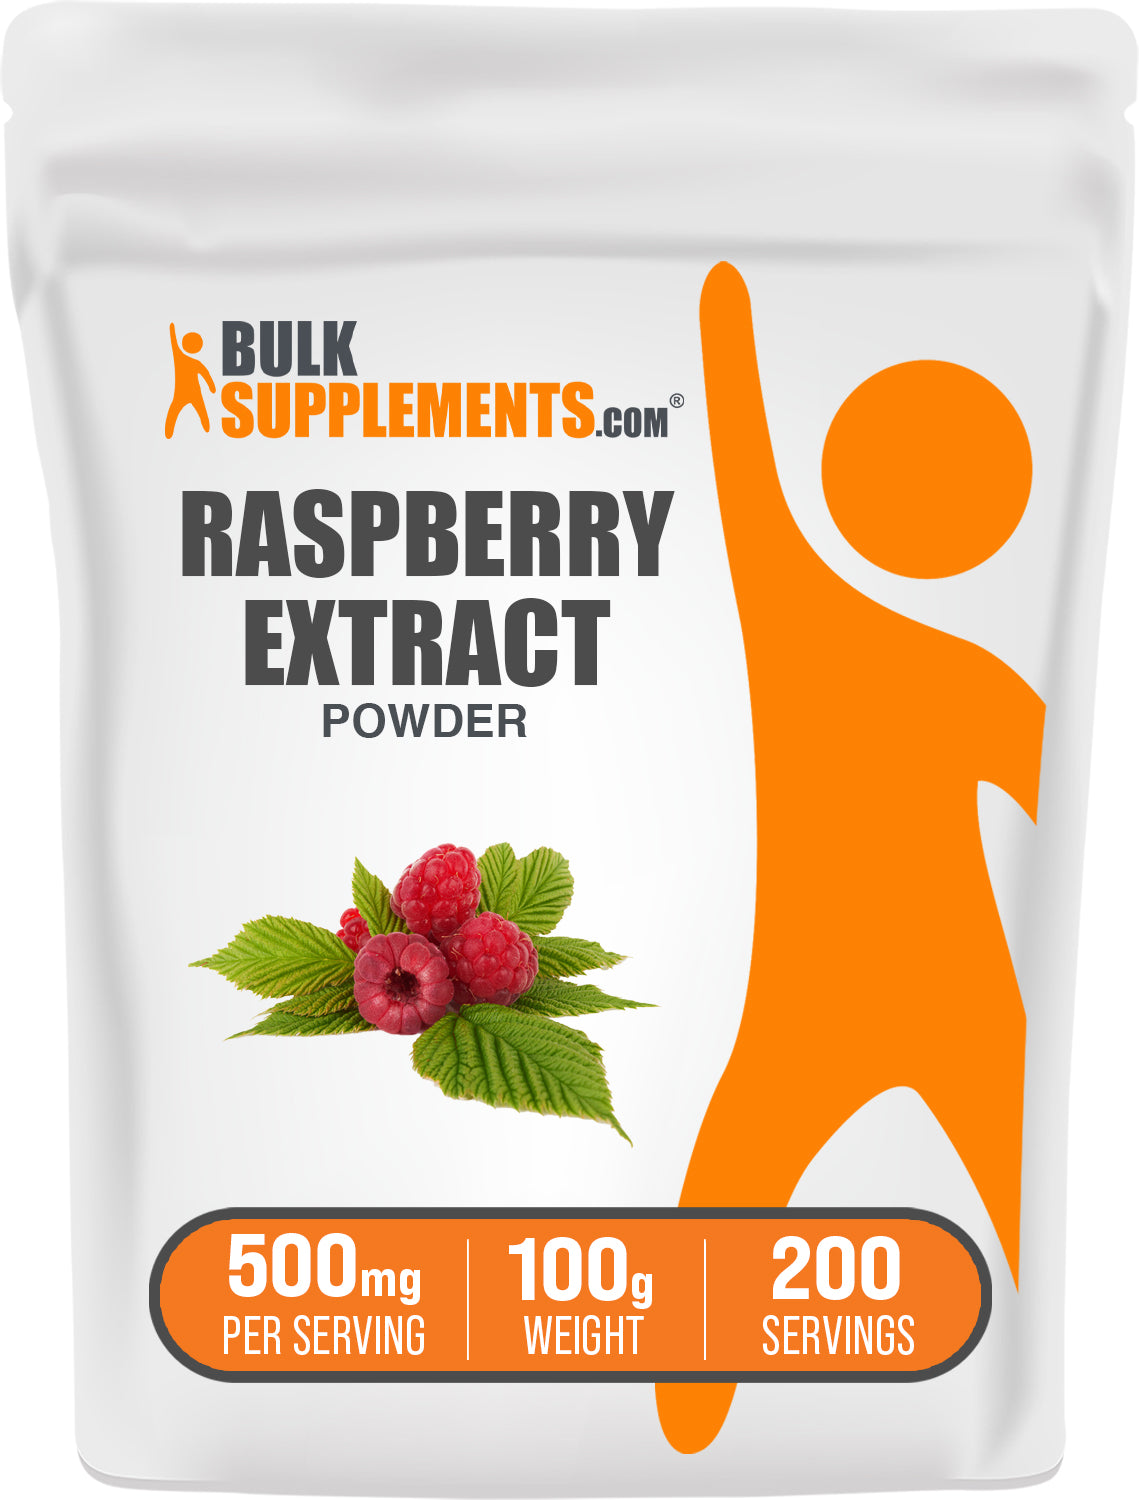 Raspberry Extract Powder 100g bag